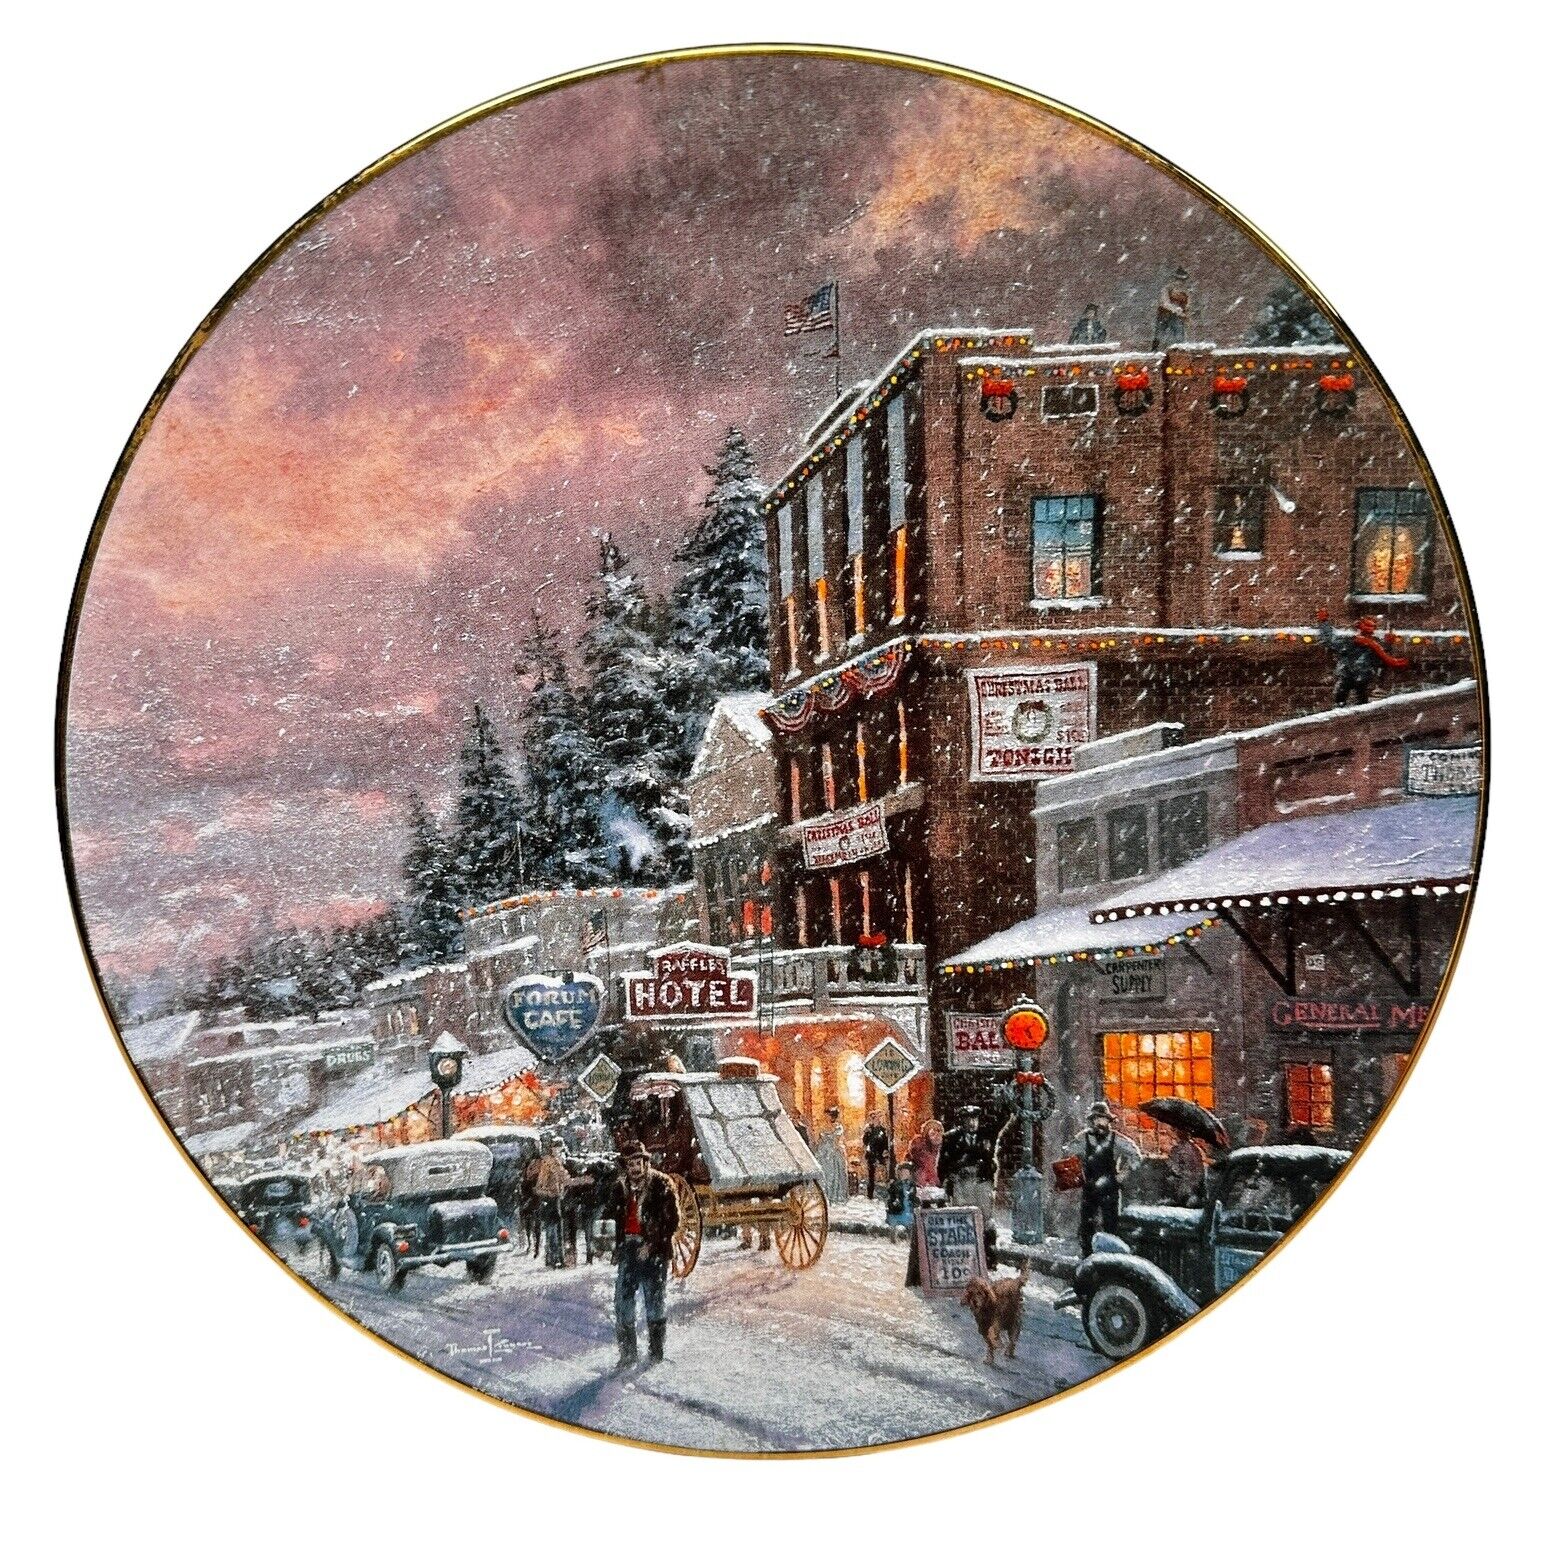 Thomas Kincaid Limited Edition Plate “A Winter’s Walk” #2447B